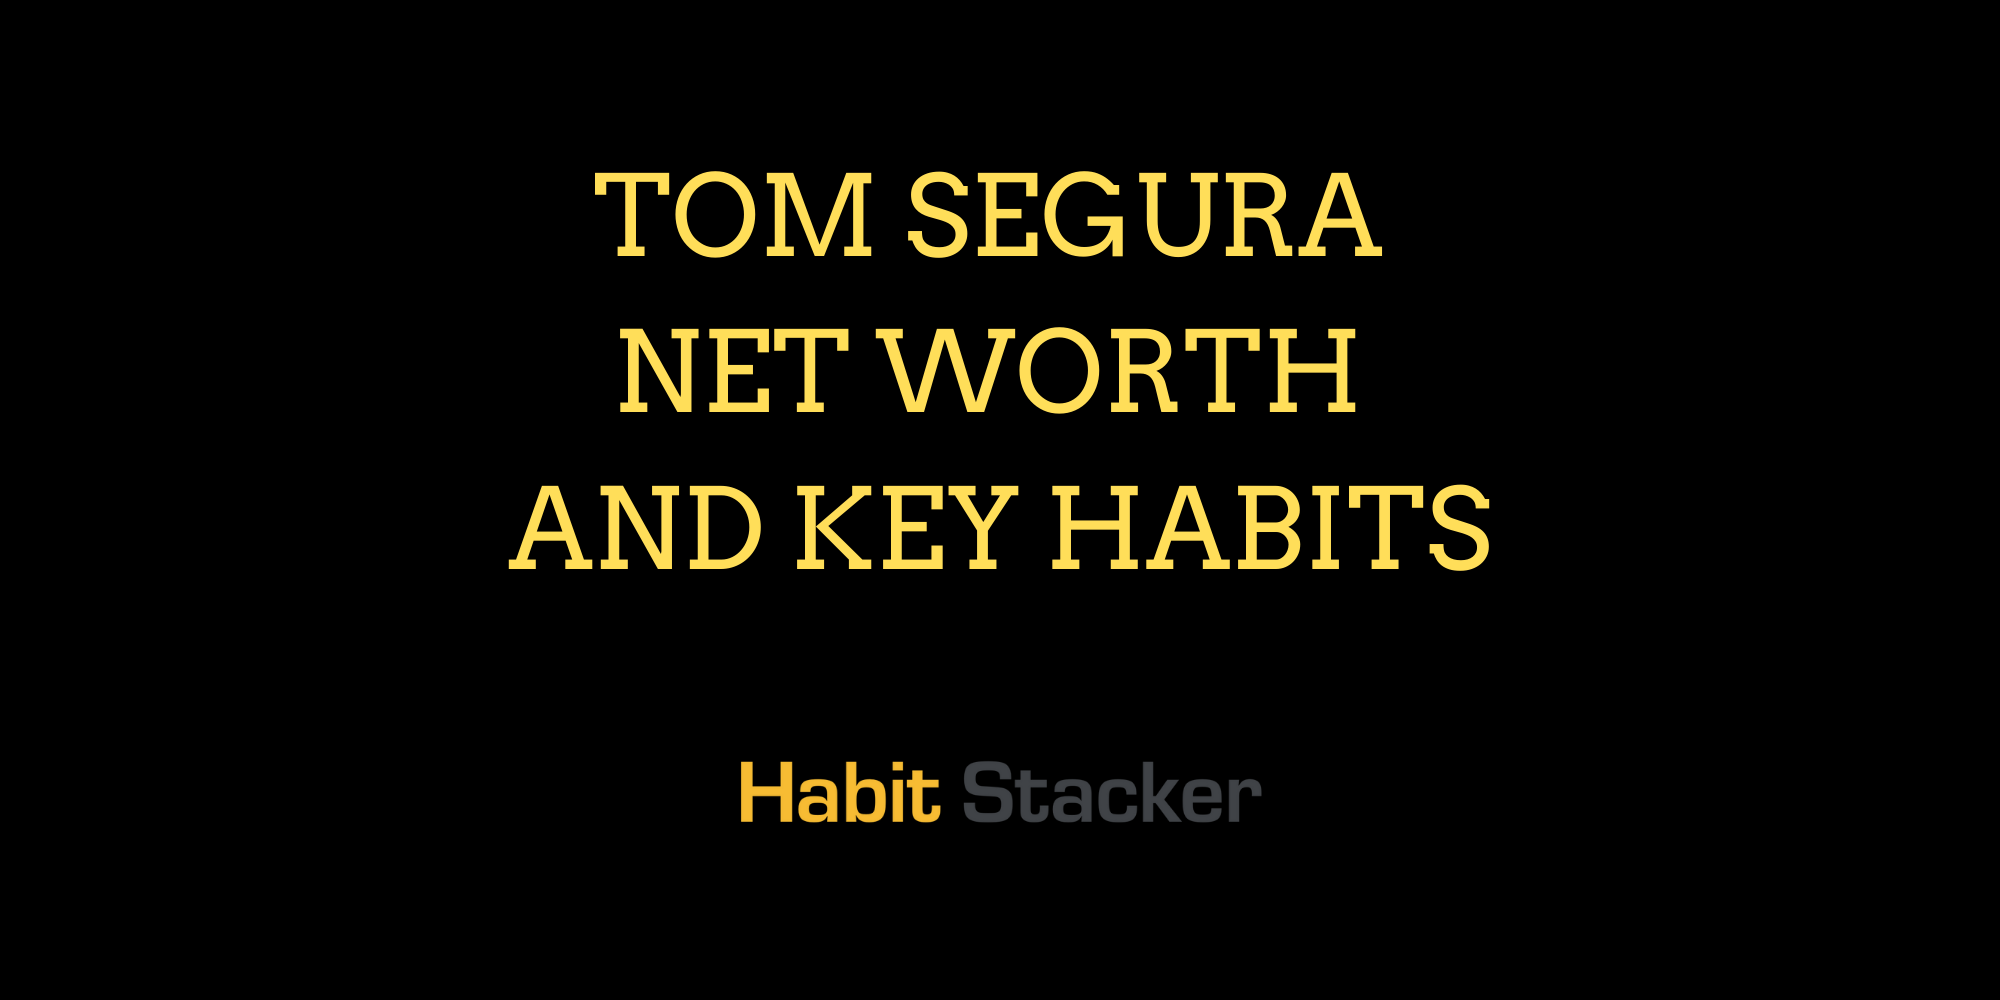 Tom Segura Net Worth and Key Habits